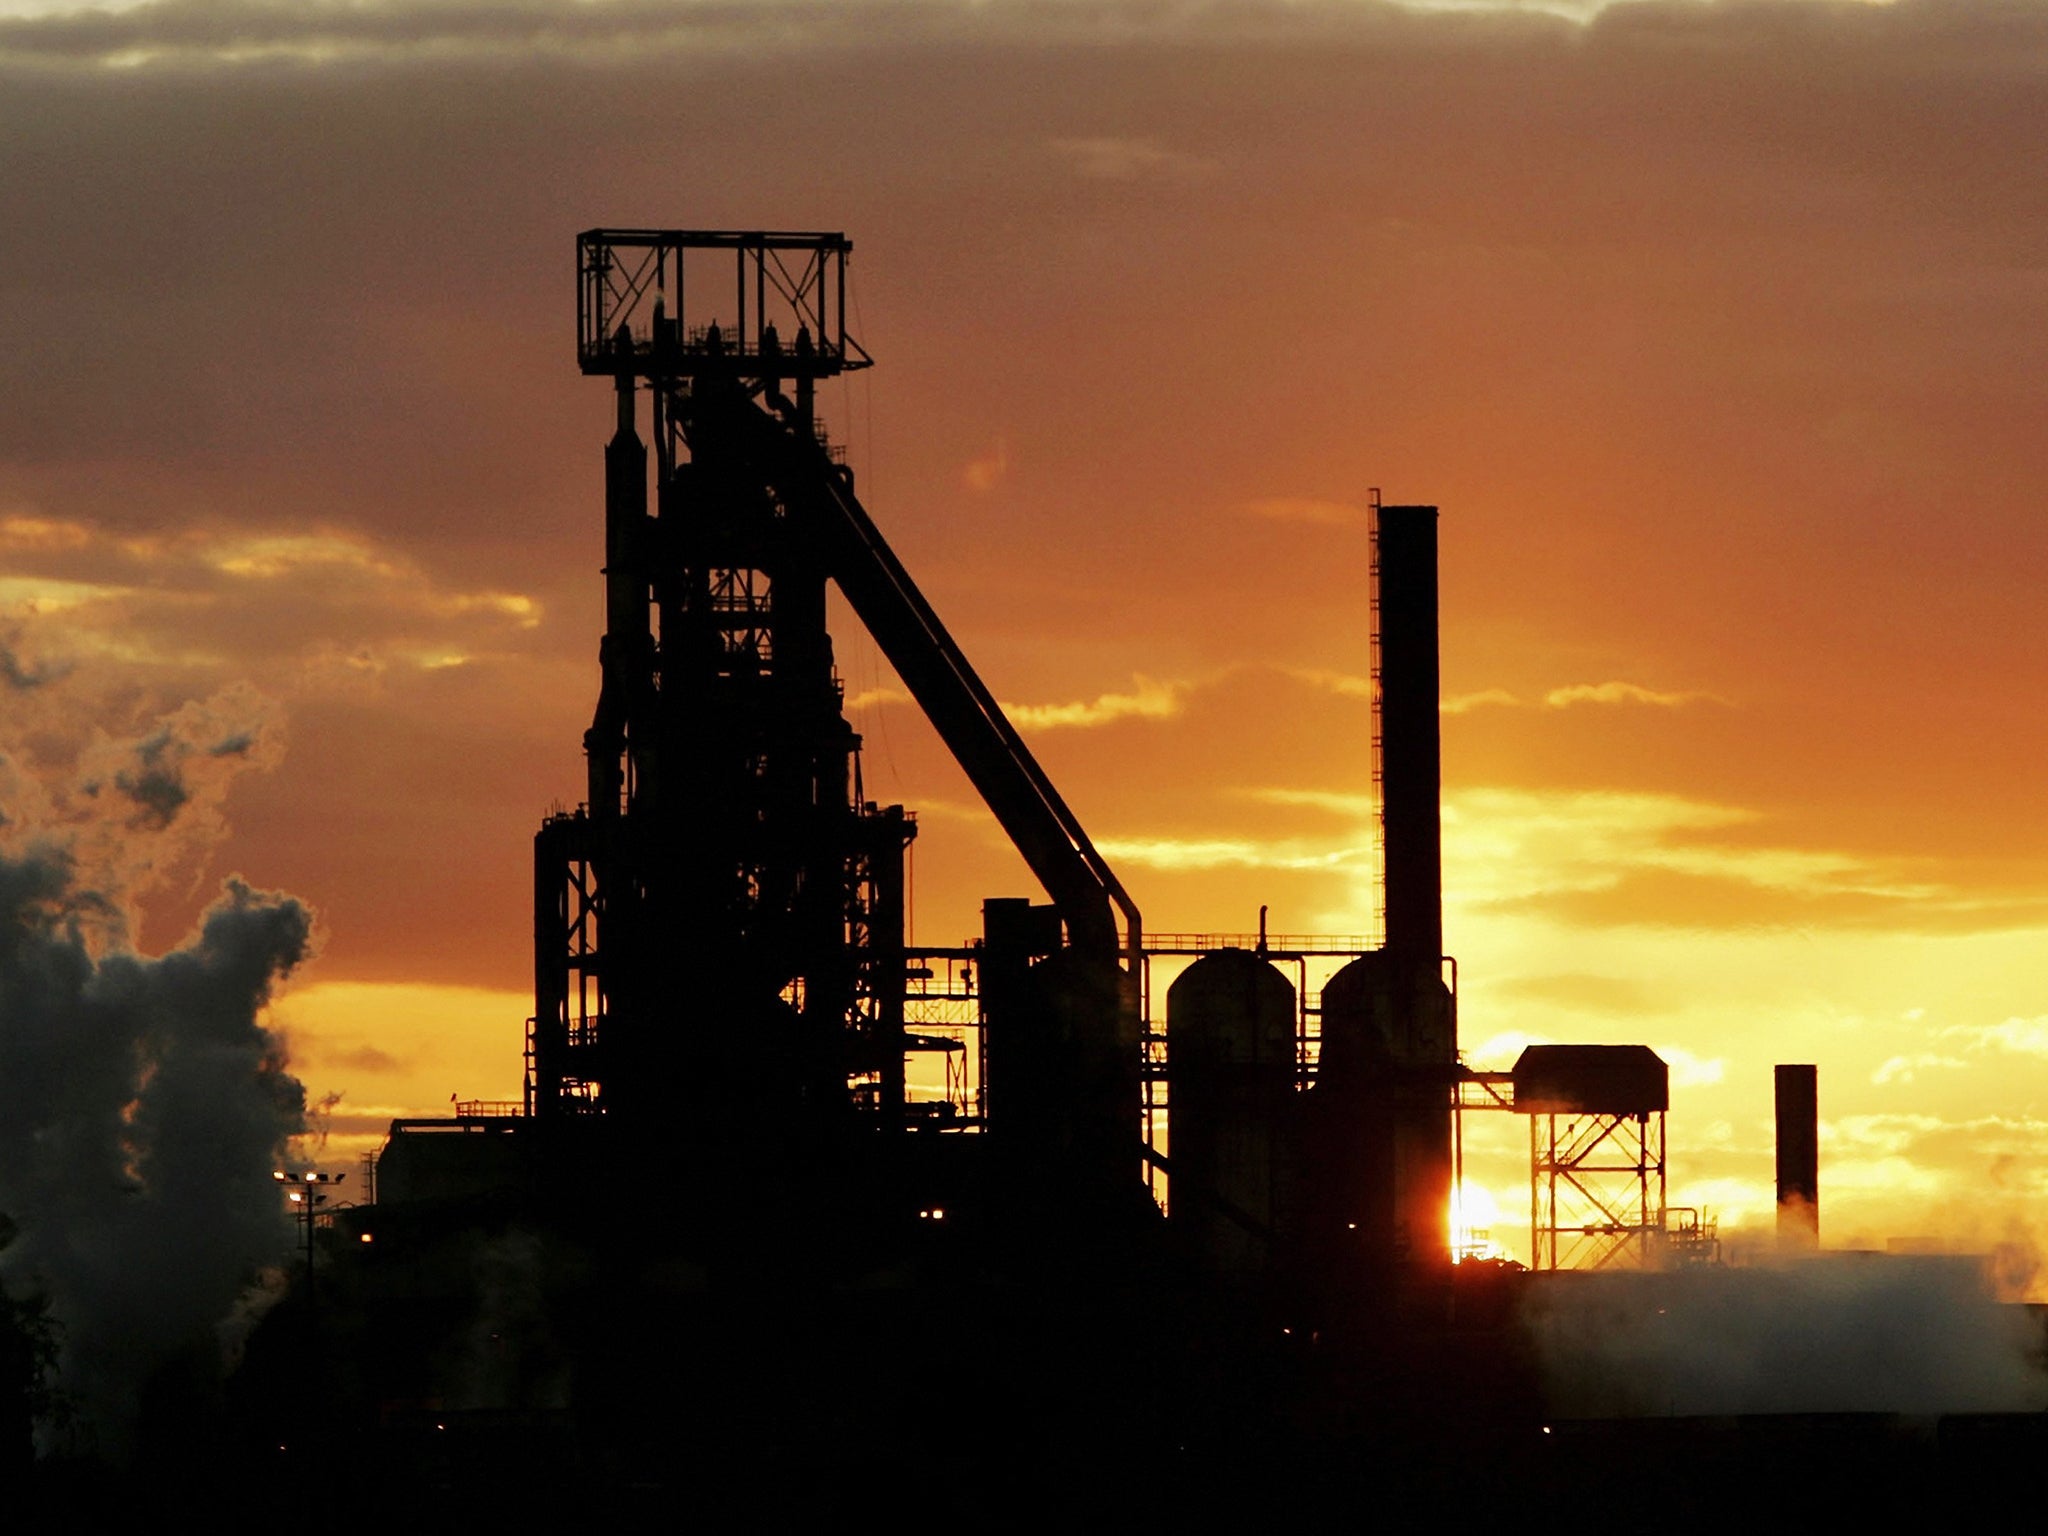 Tata steel works, Port Talbot.